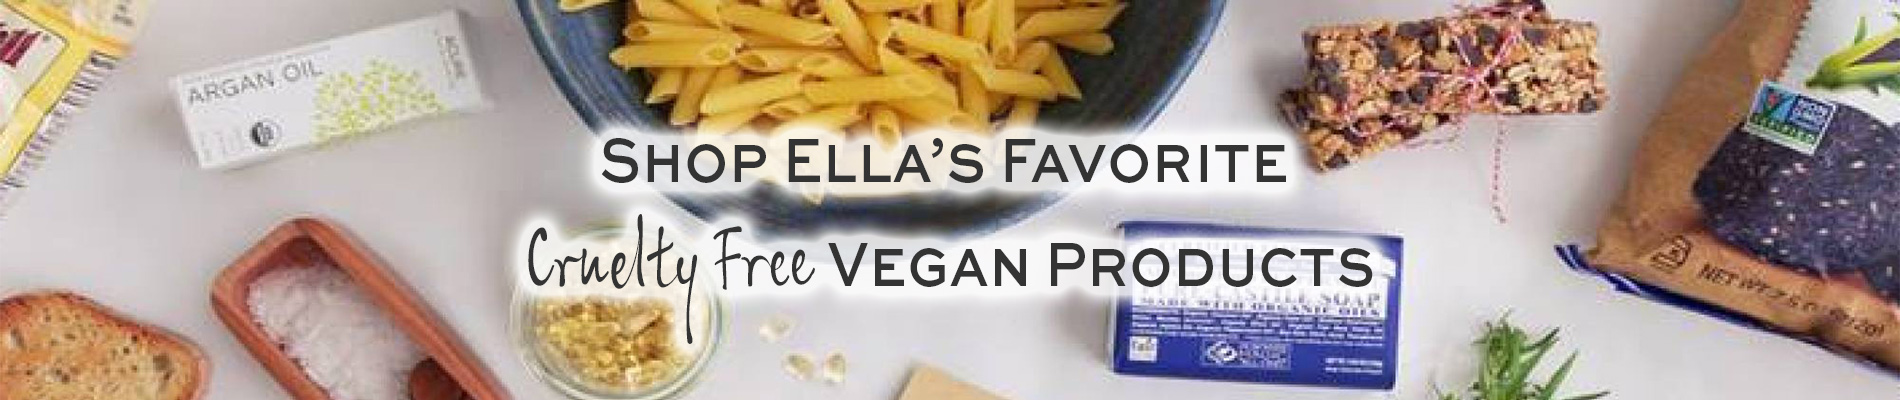 Favorite-Vegan-Products-Page-Slider2